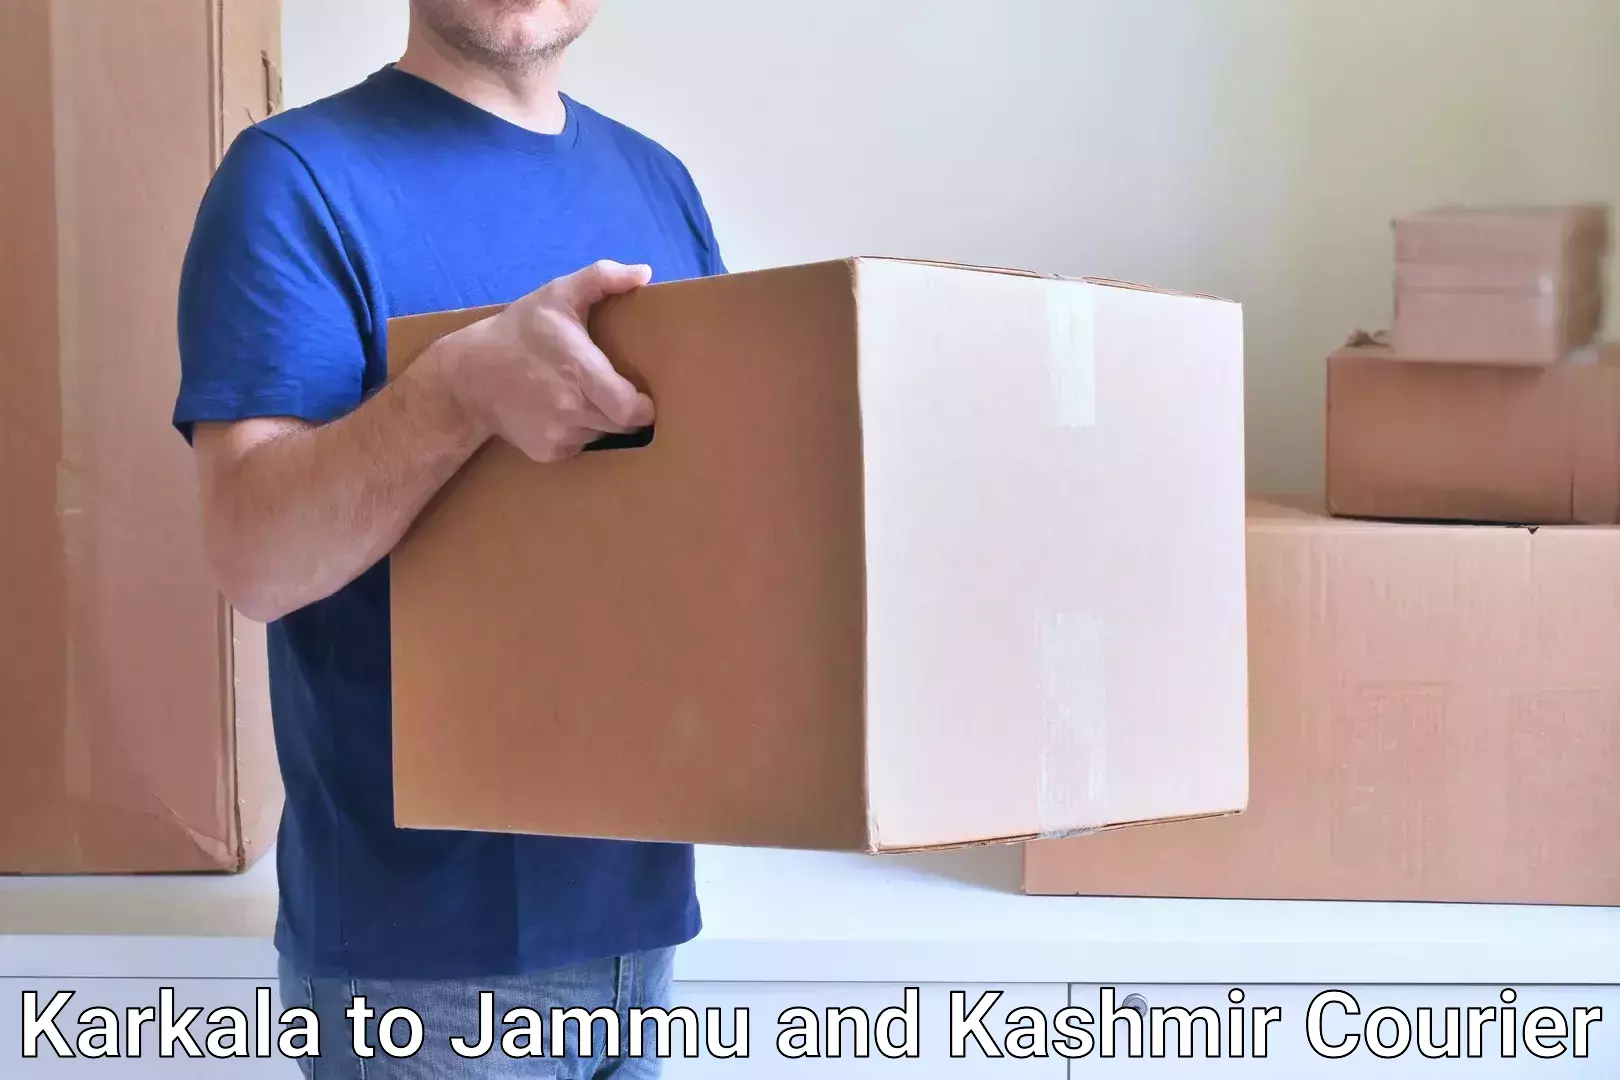 24-hour delivery options Karkala to Bandipur